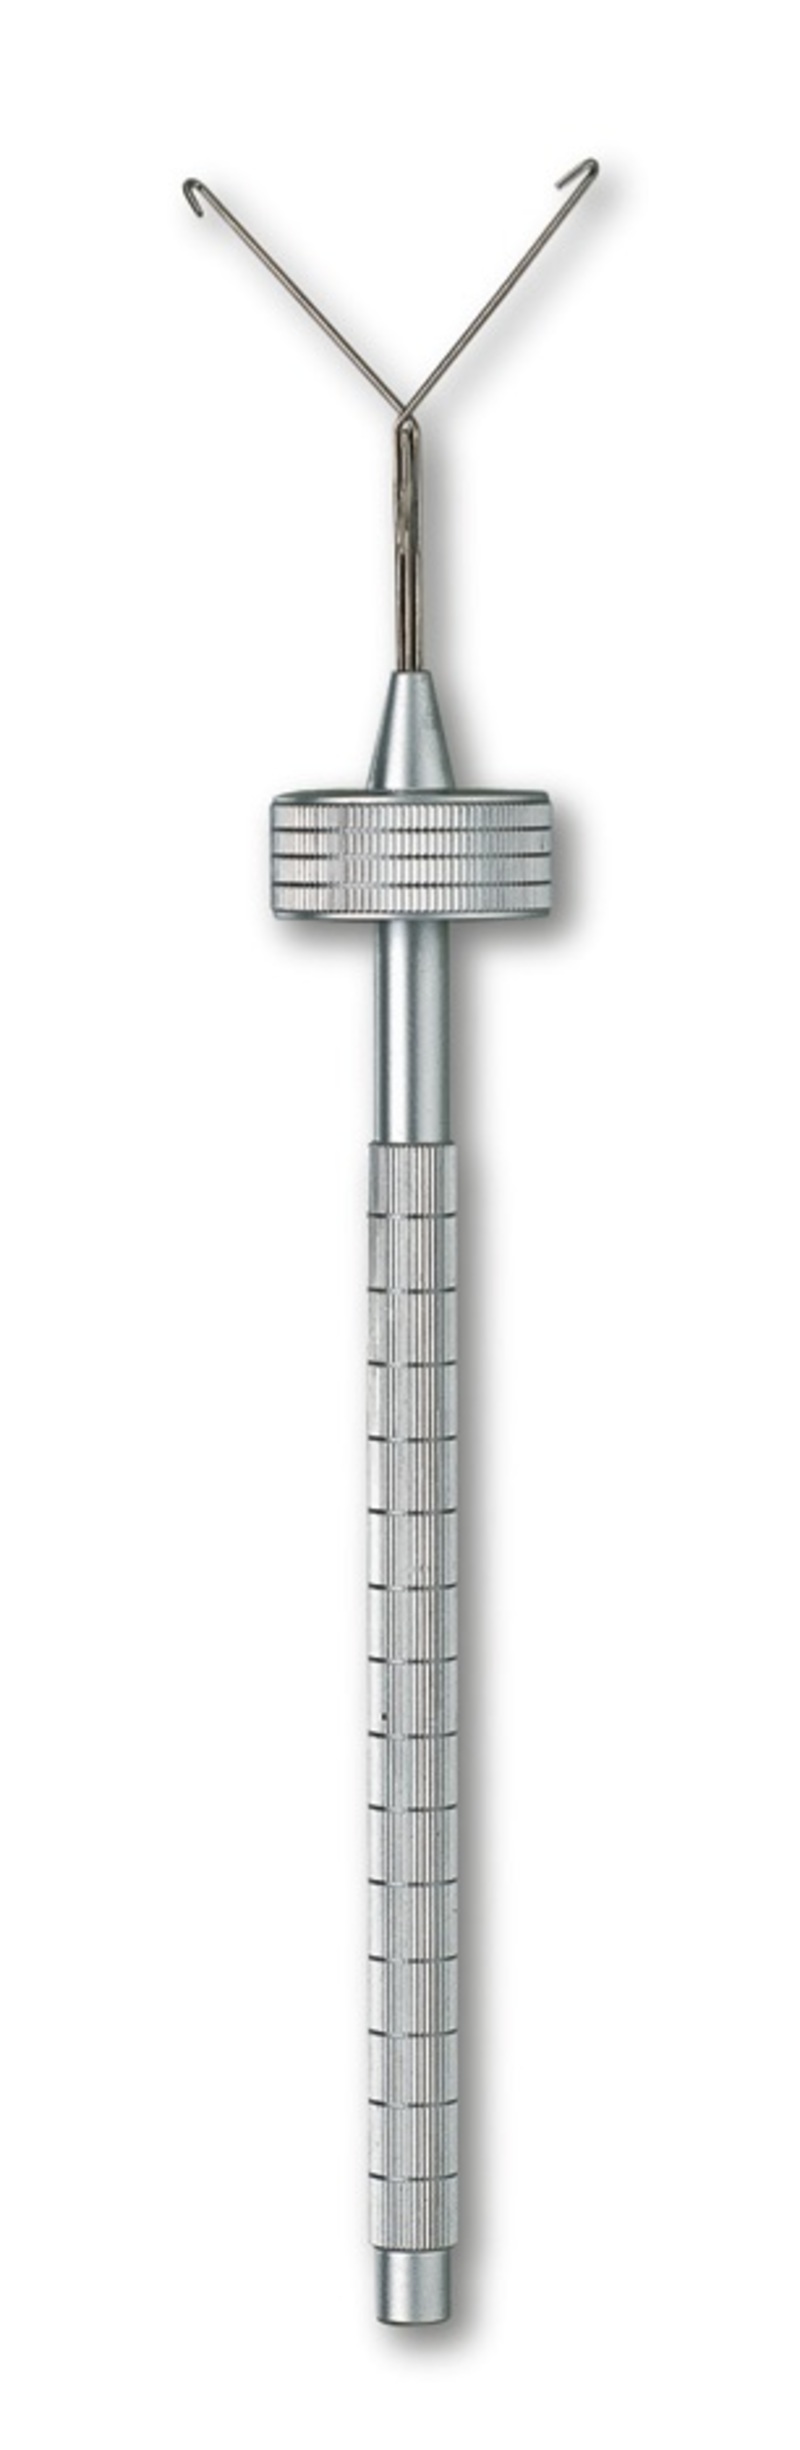 C&F Design Rotary Twister Plus (CFT-130)